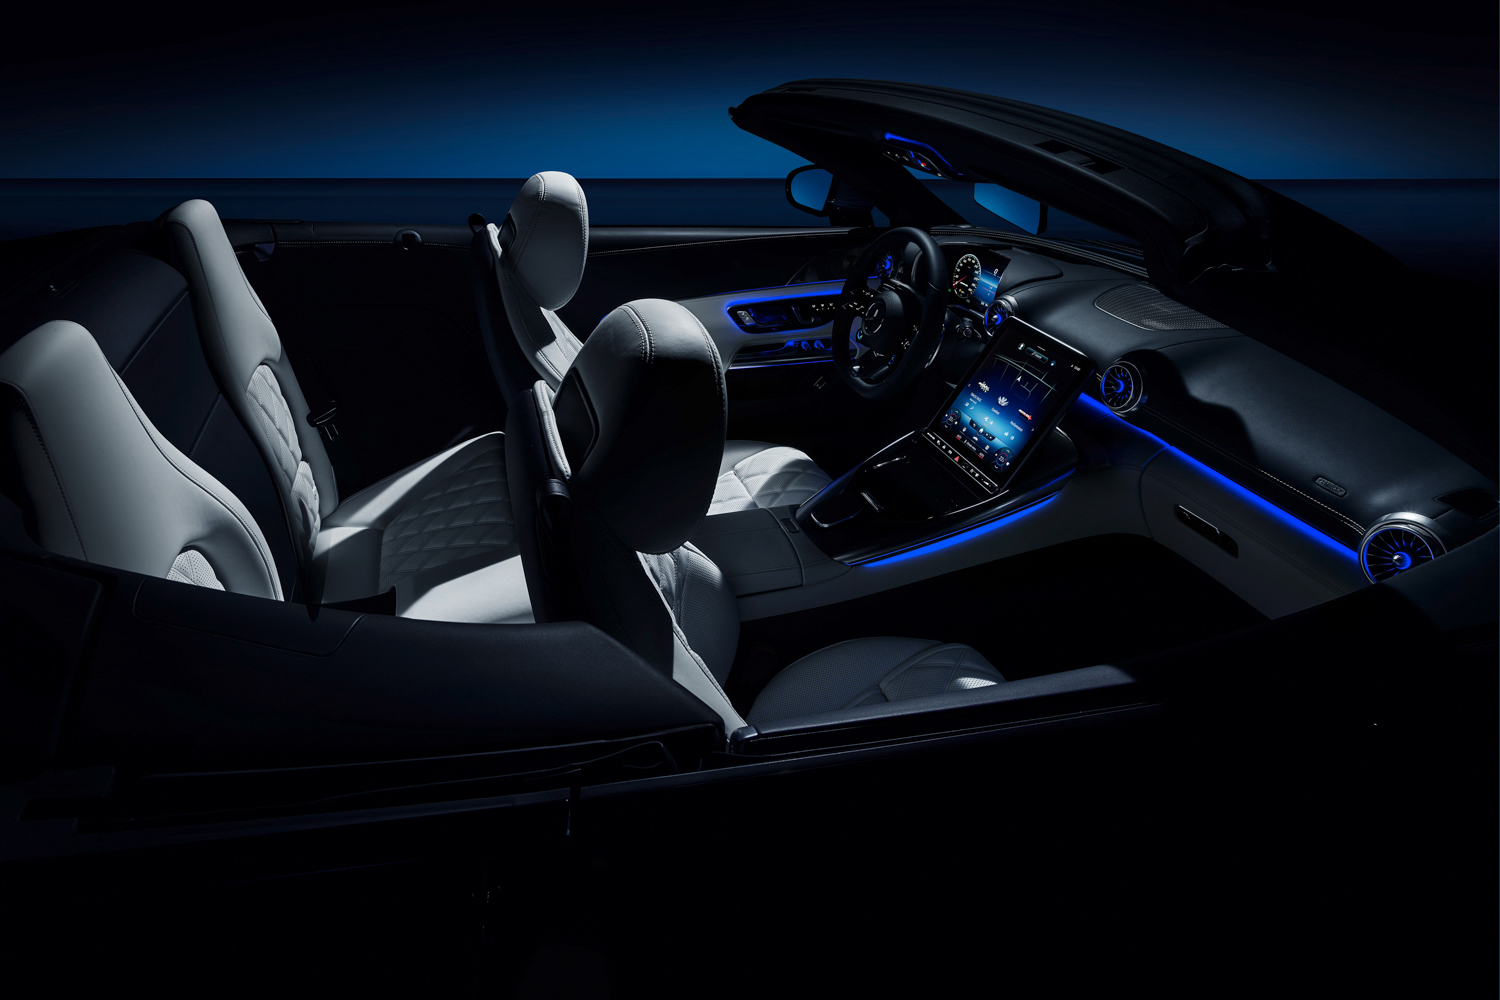 Mercedes shows off new SL interior